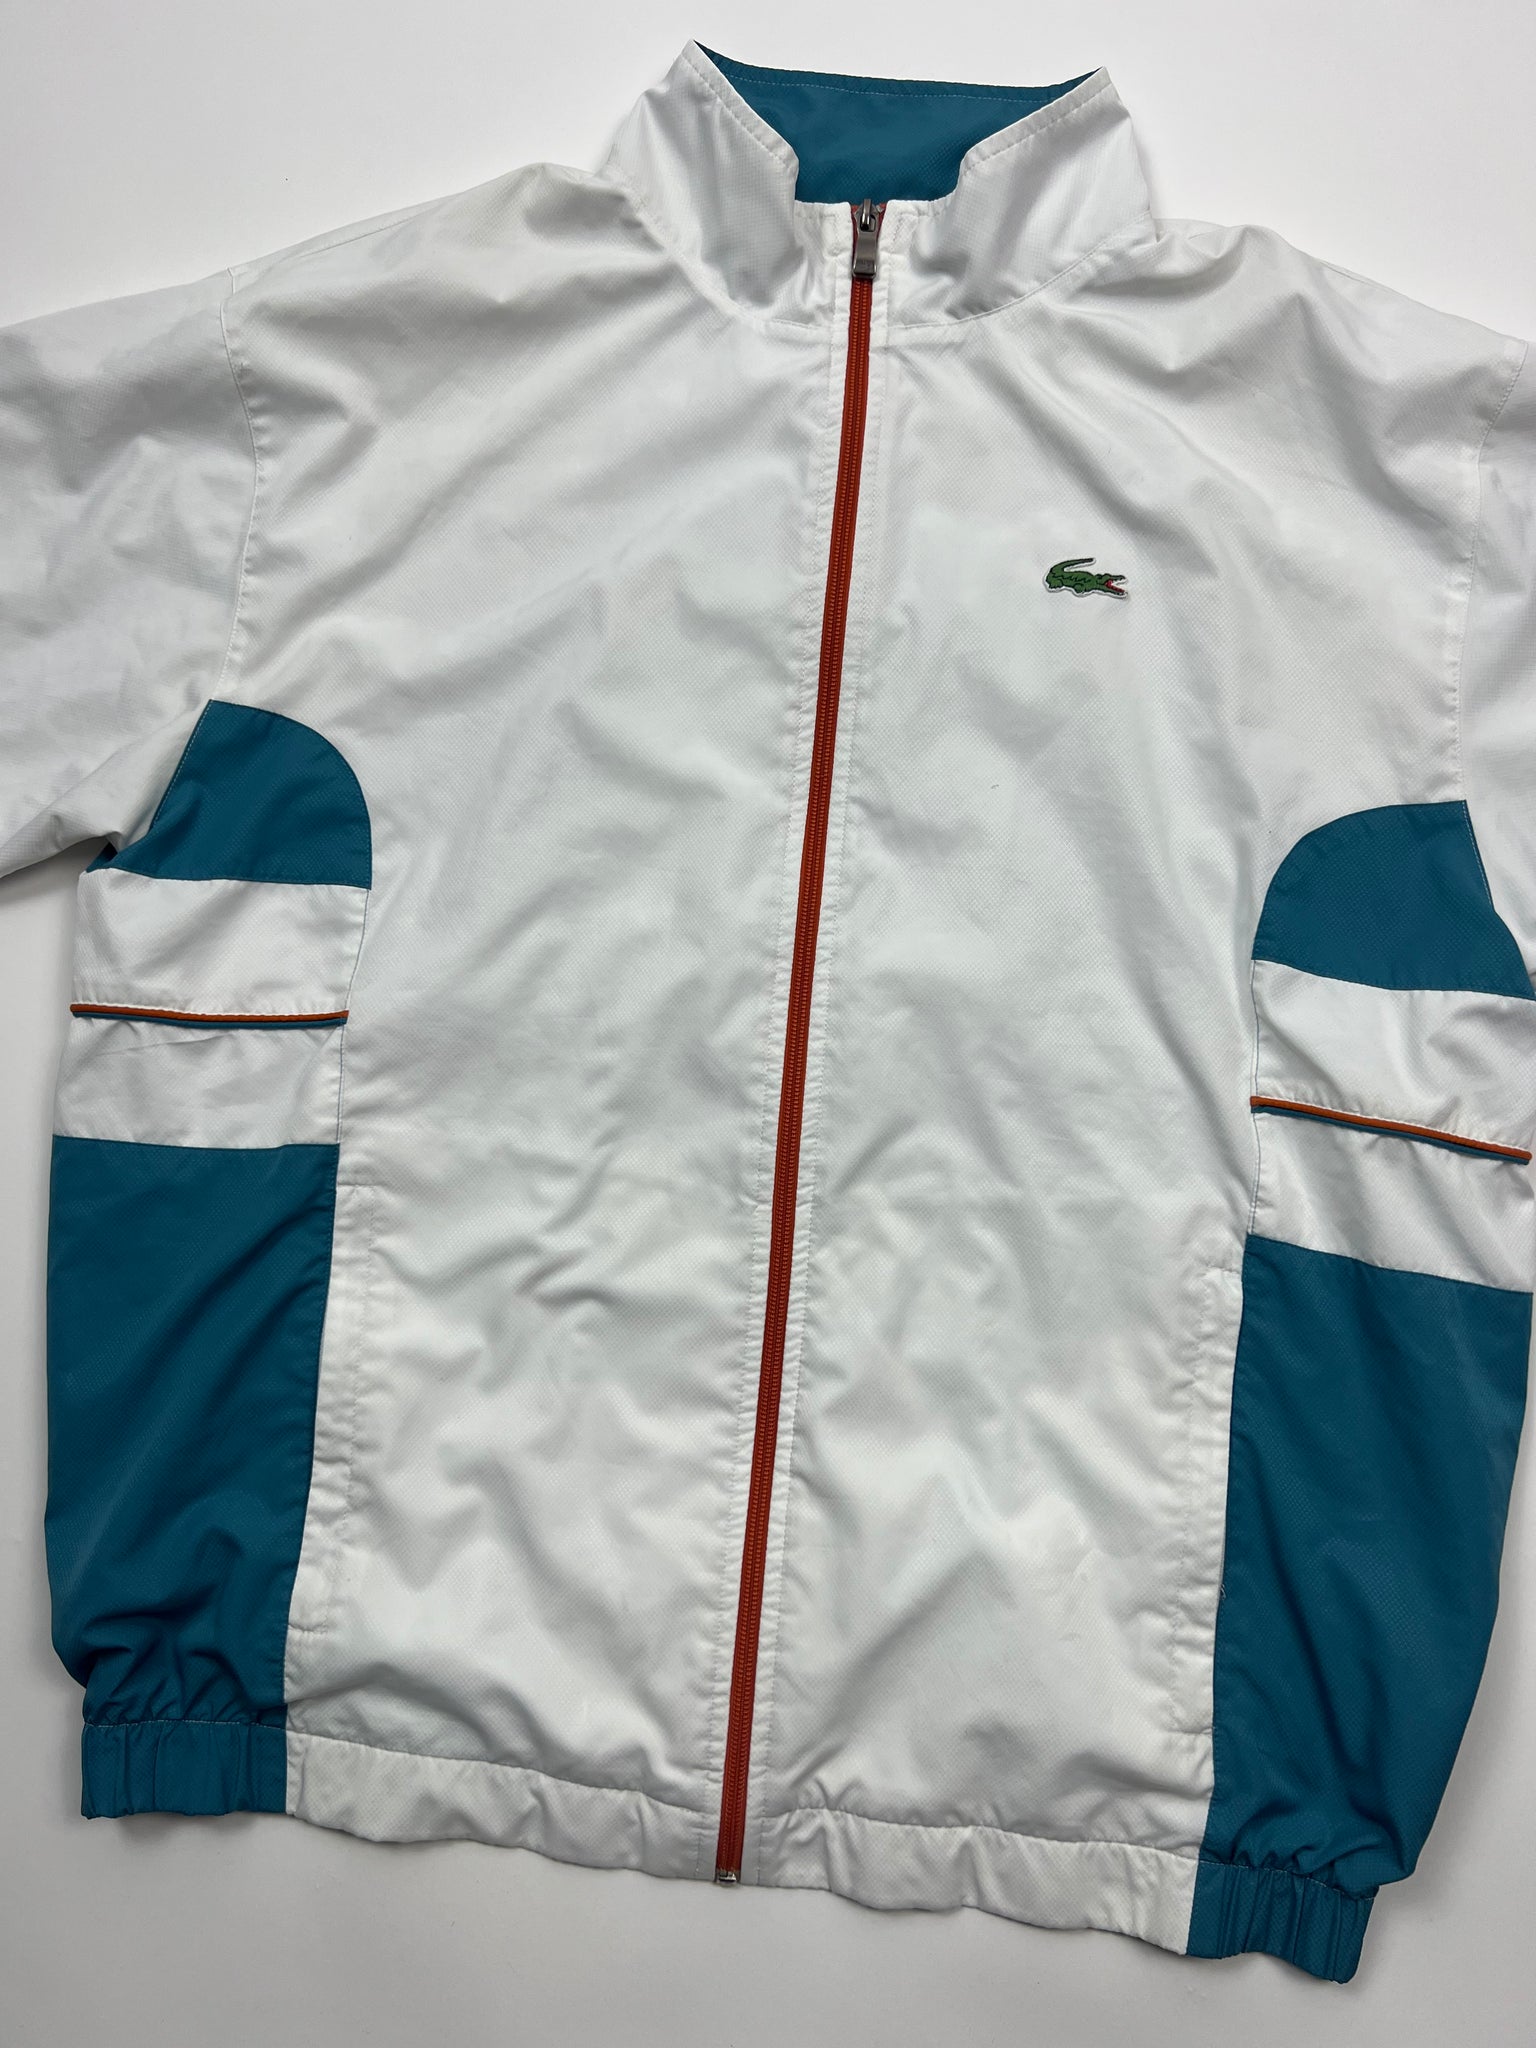 Lacoste Jacket (XL)